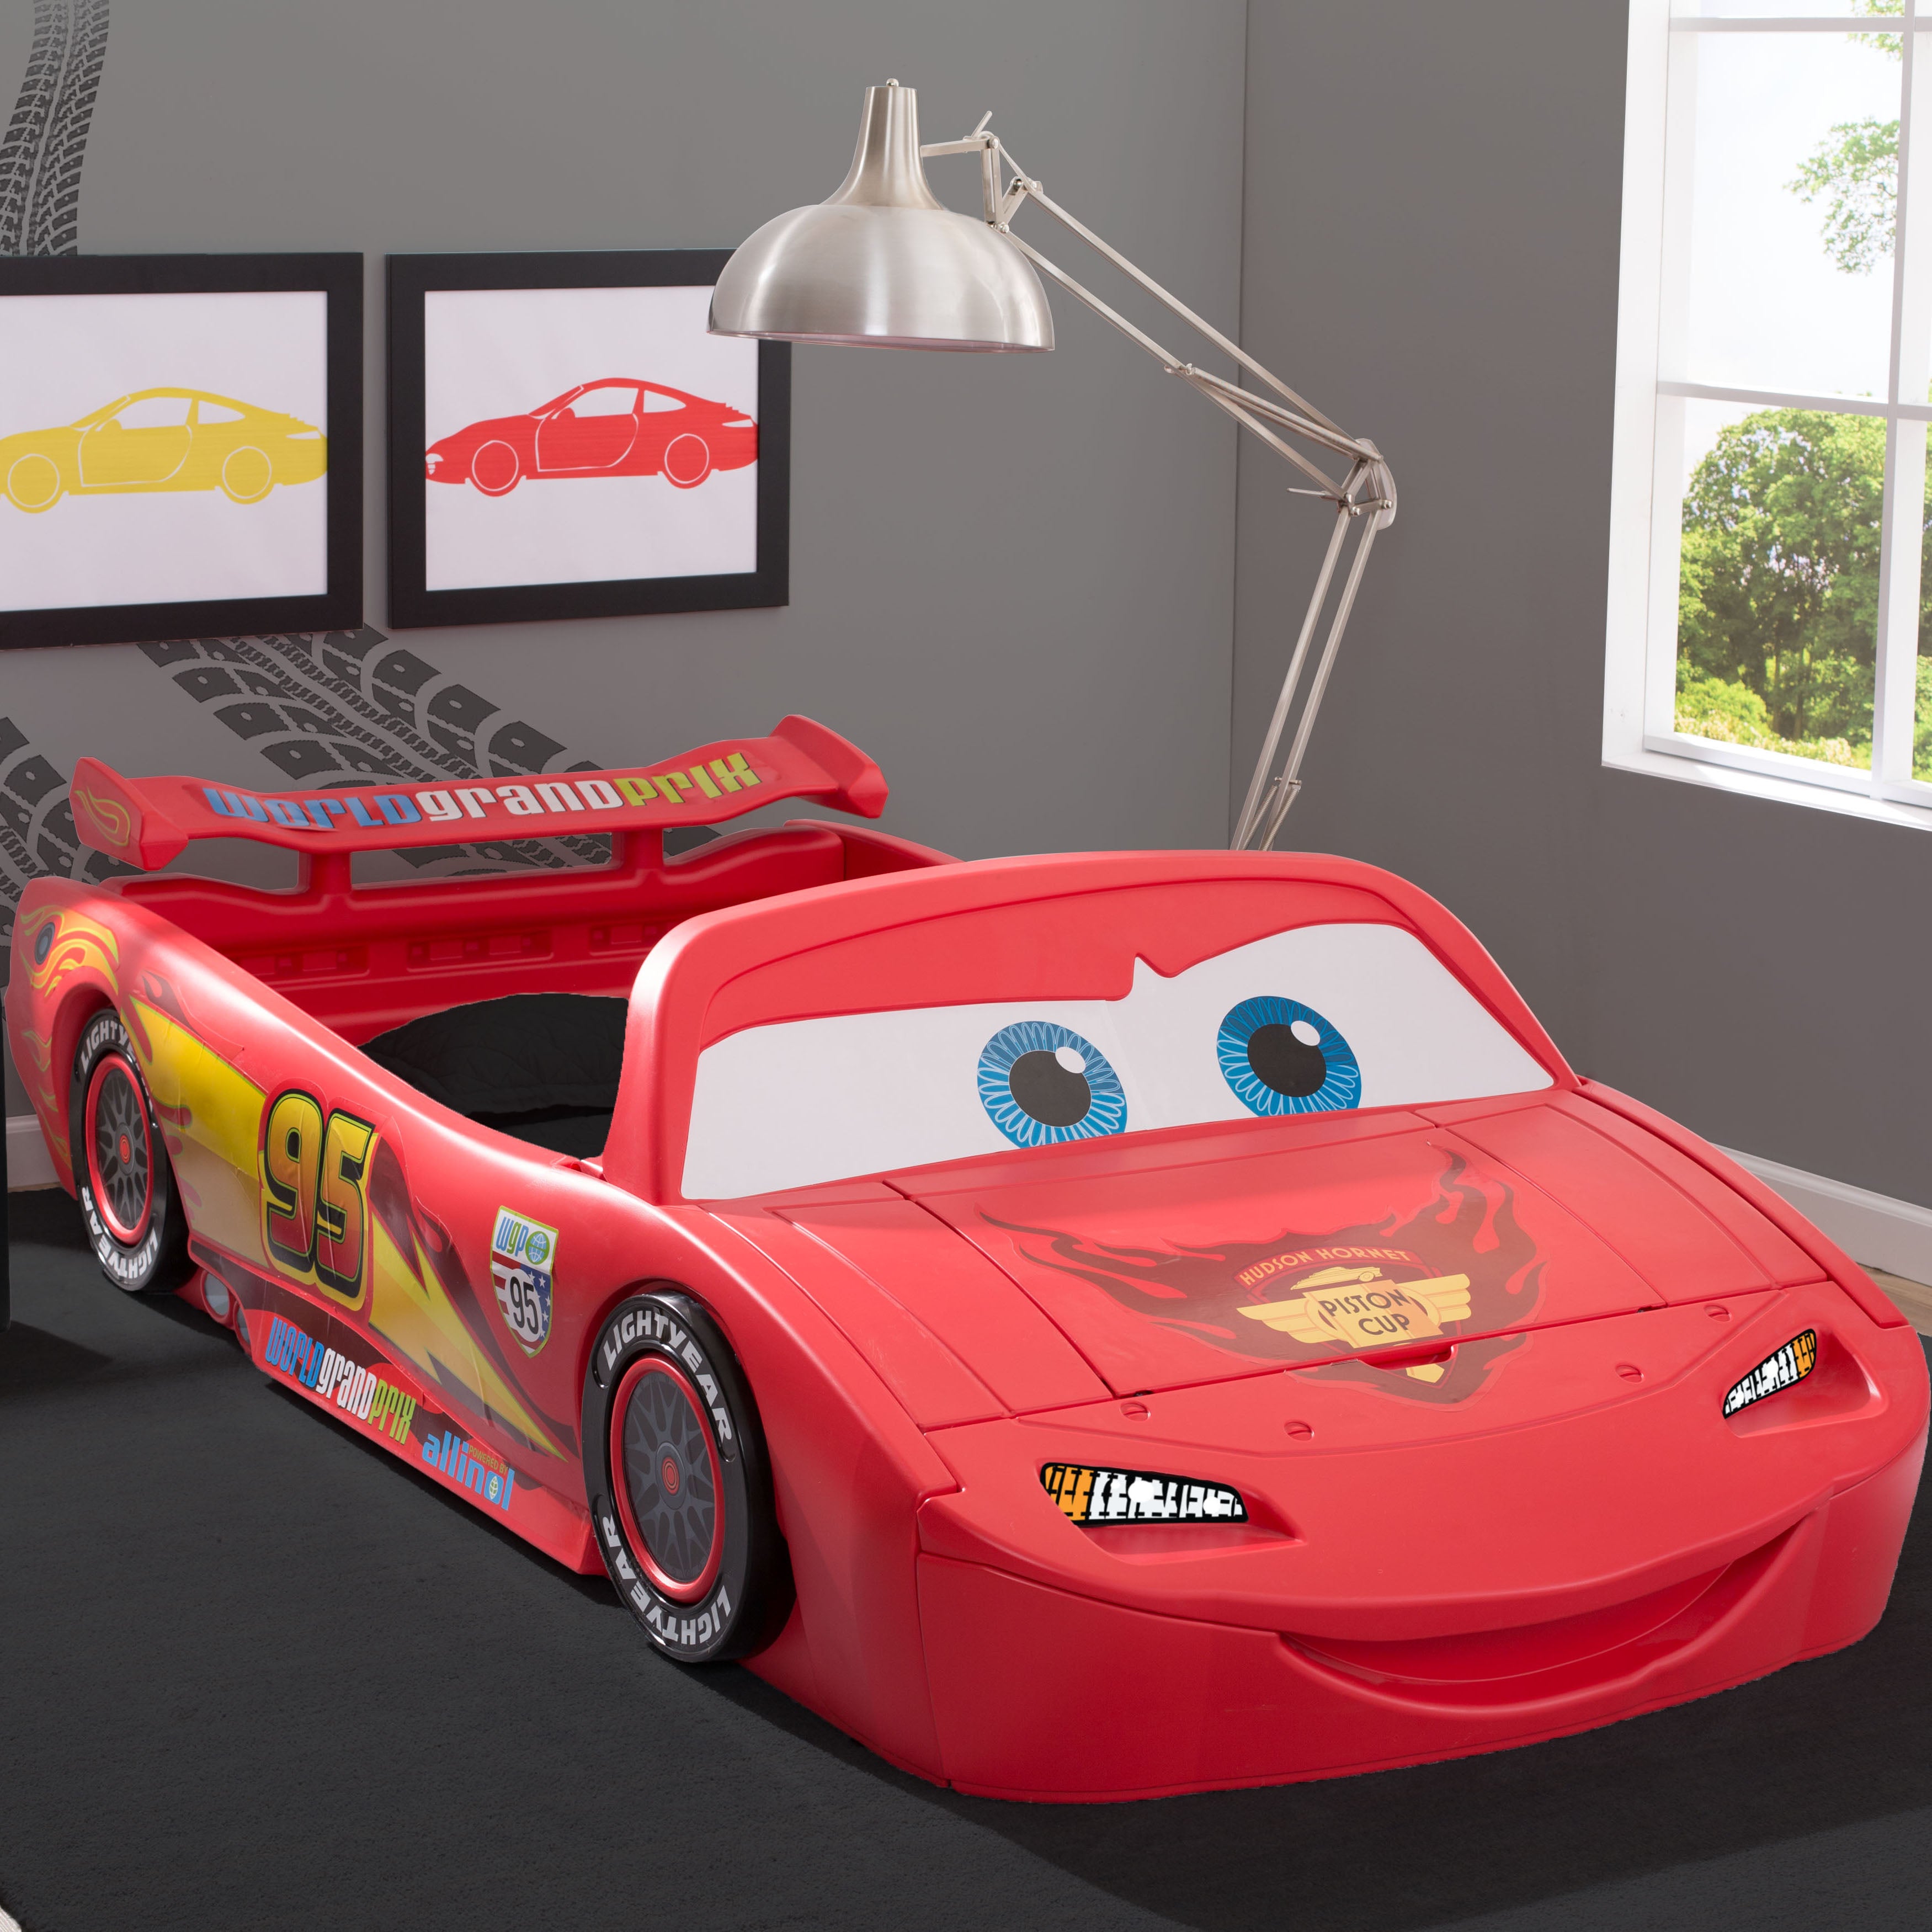 Disney Auto Magnet - Cars Lightning McQueen